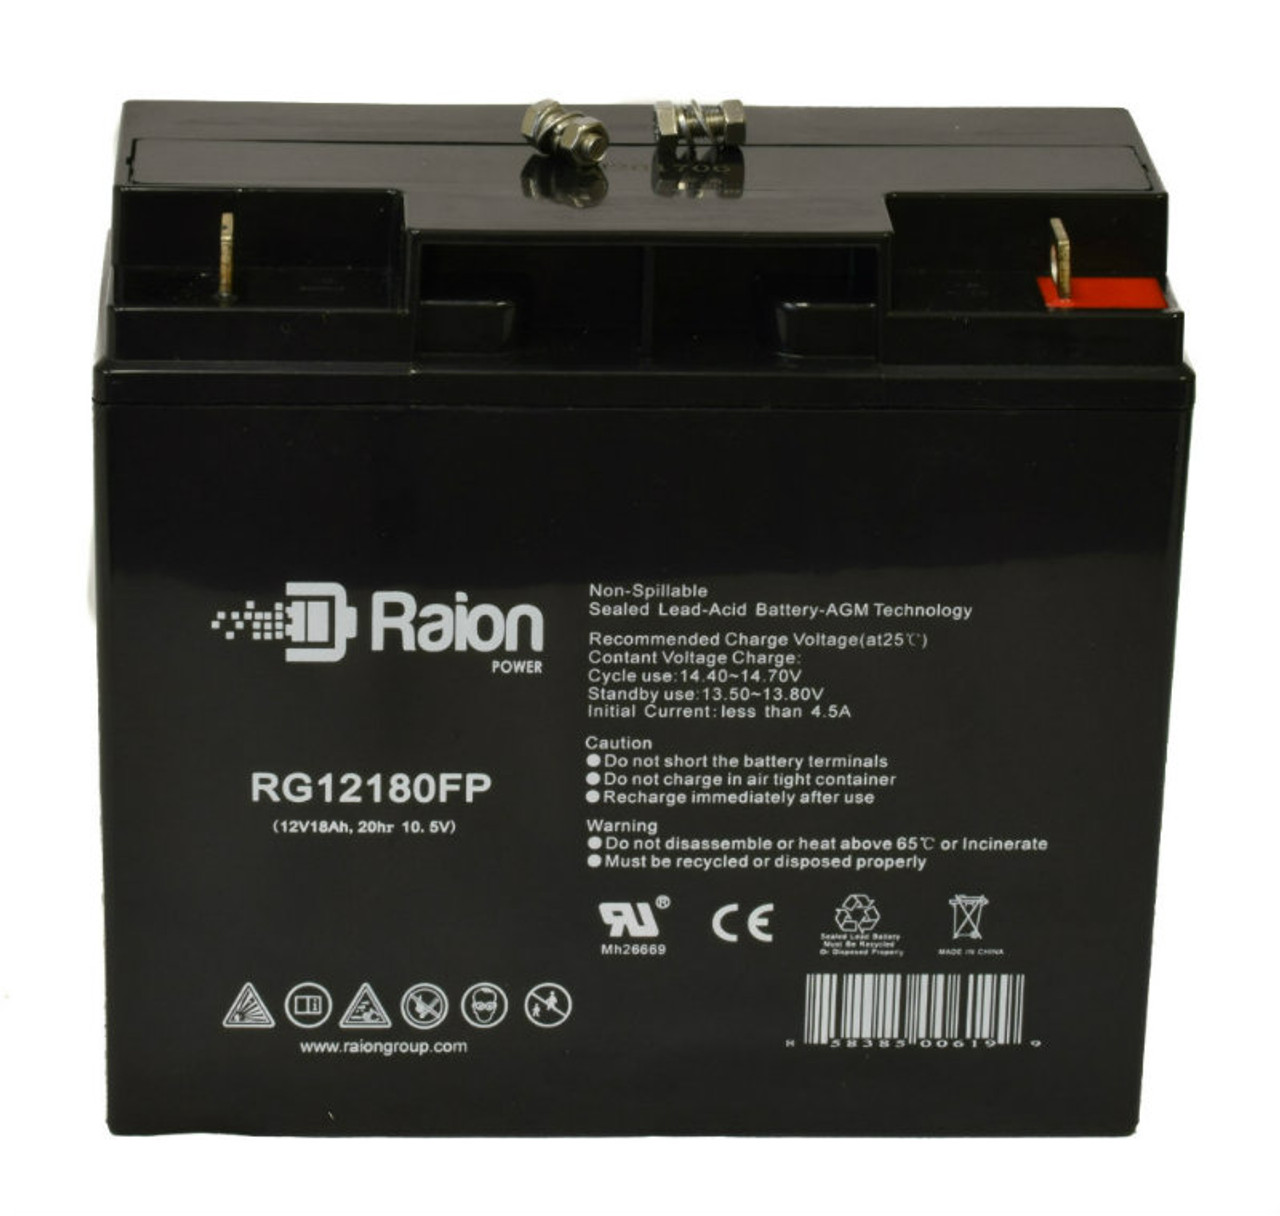 Raion Power RG12180FP 12V 18Ah Lead Acid Battery for CGR Medical Corp Battrix Portable X-ray